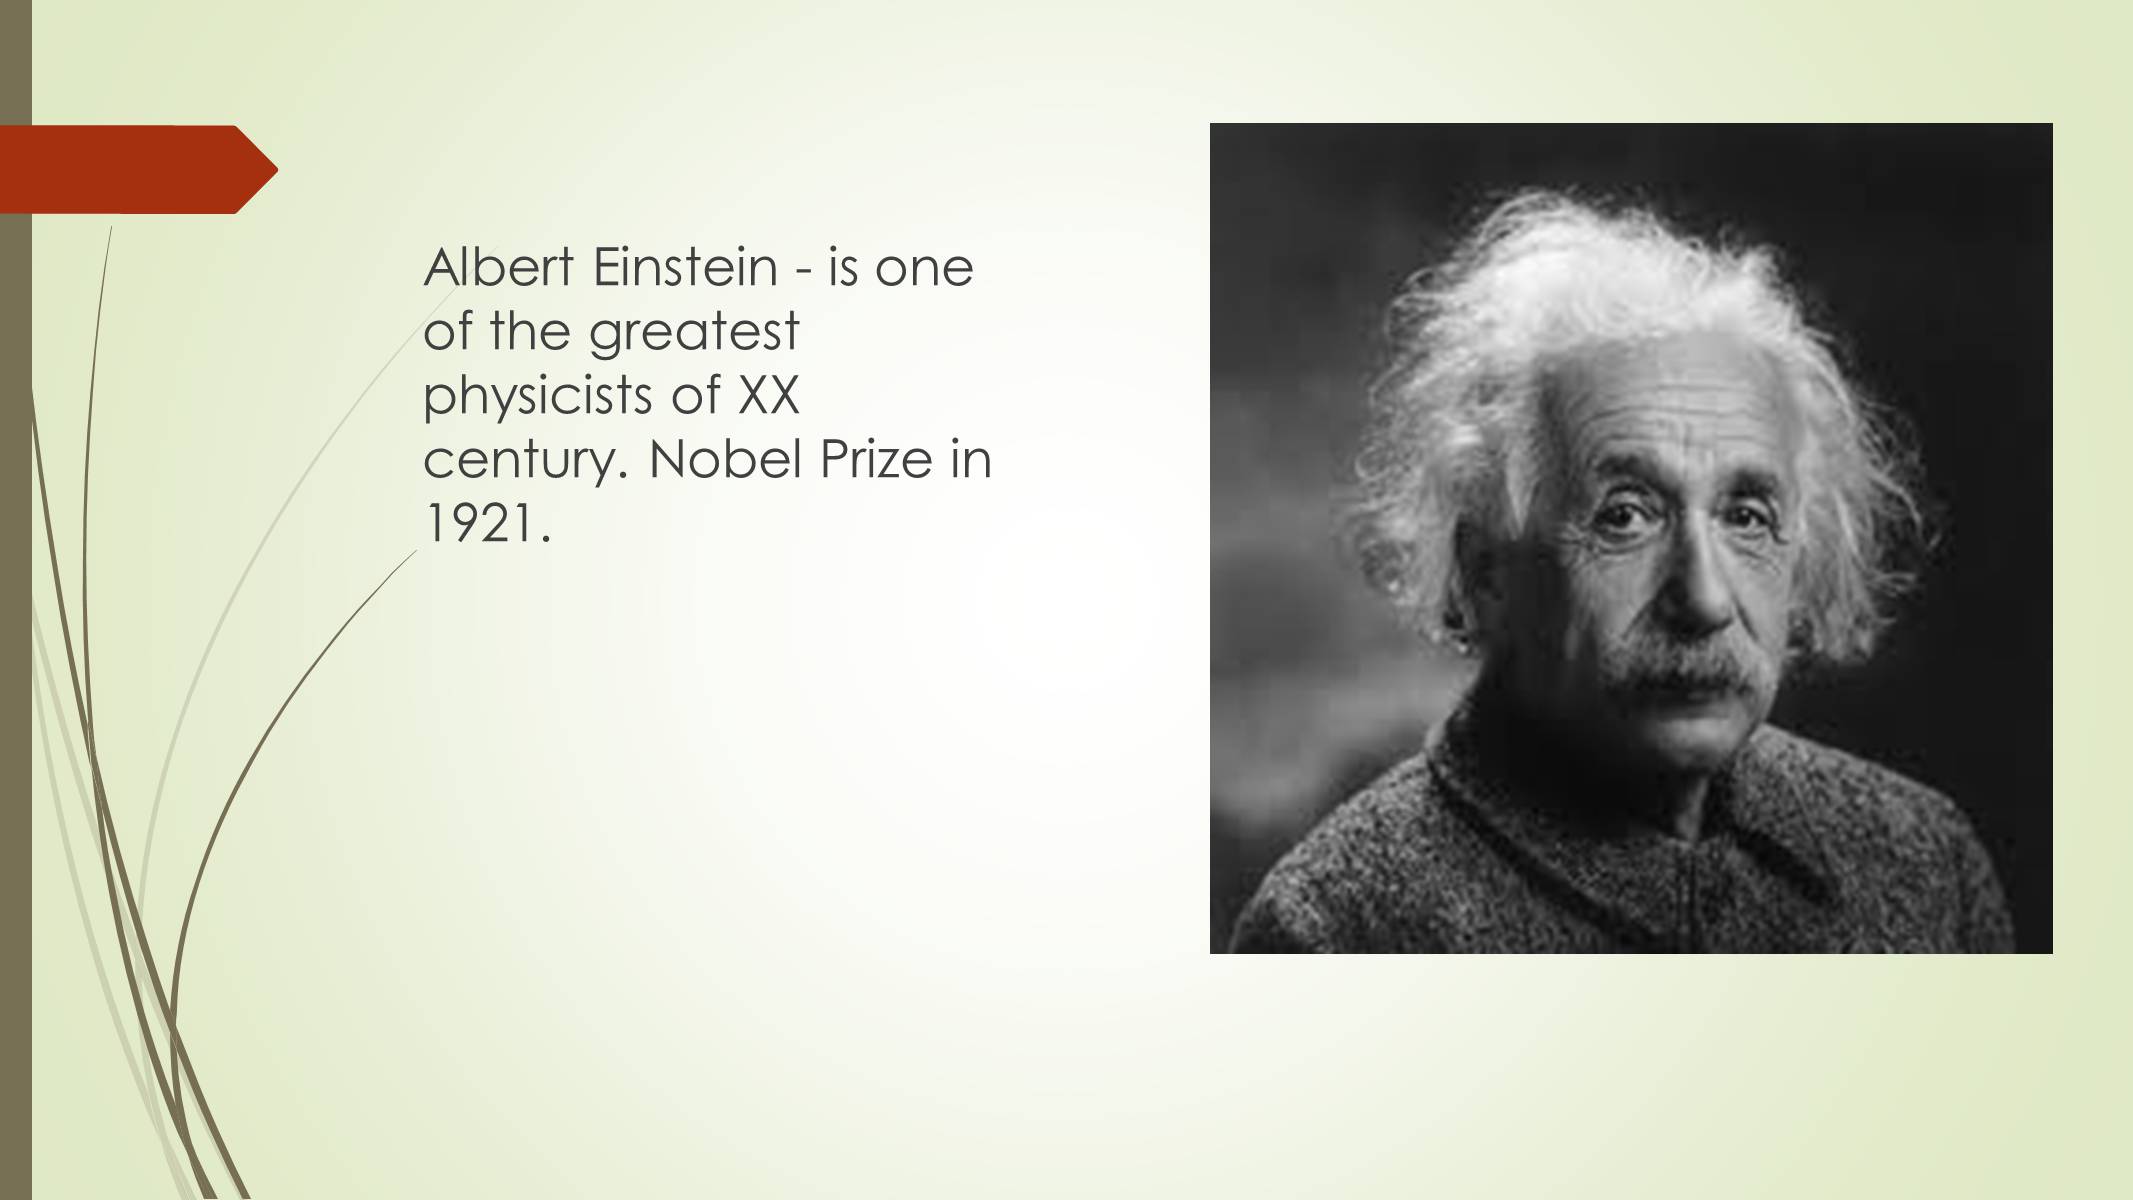 Albert Einstein - is one of the greatest physicists of XX century. 